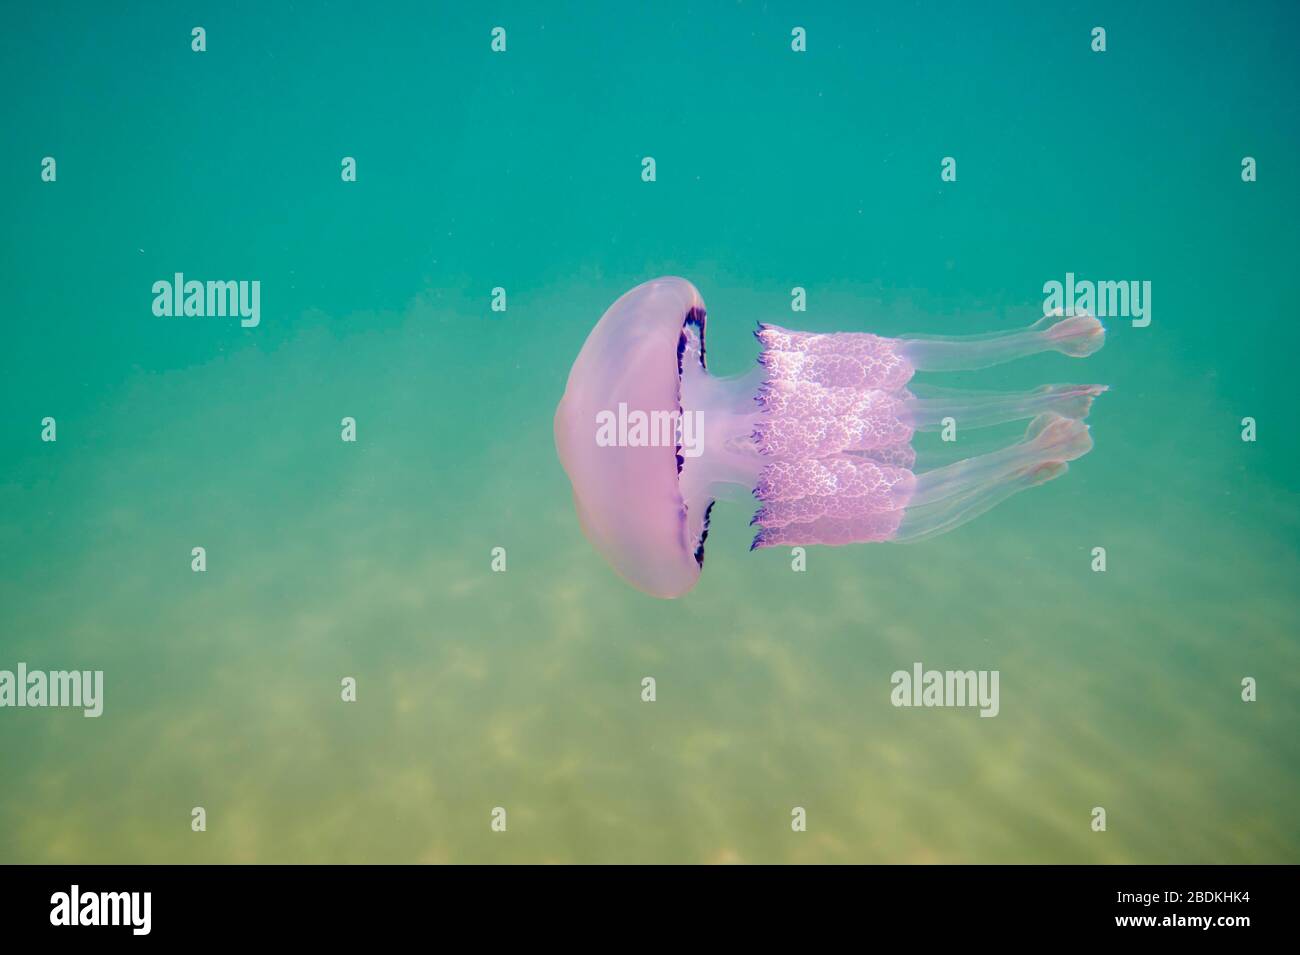 Dustbin-lid jellyfish (Rhizostoma pulmo) in shallow water, Catalonia, Spain Stock Photo